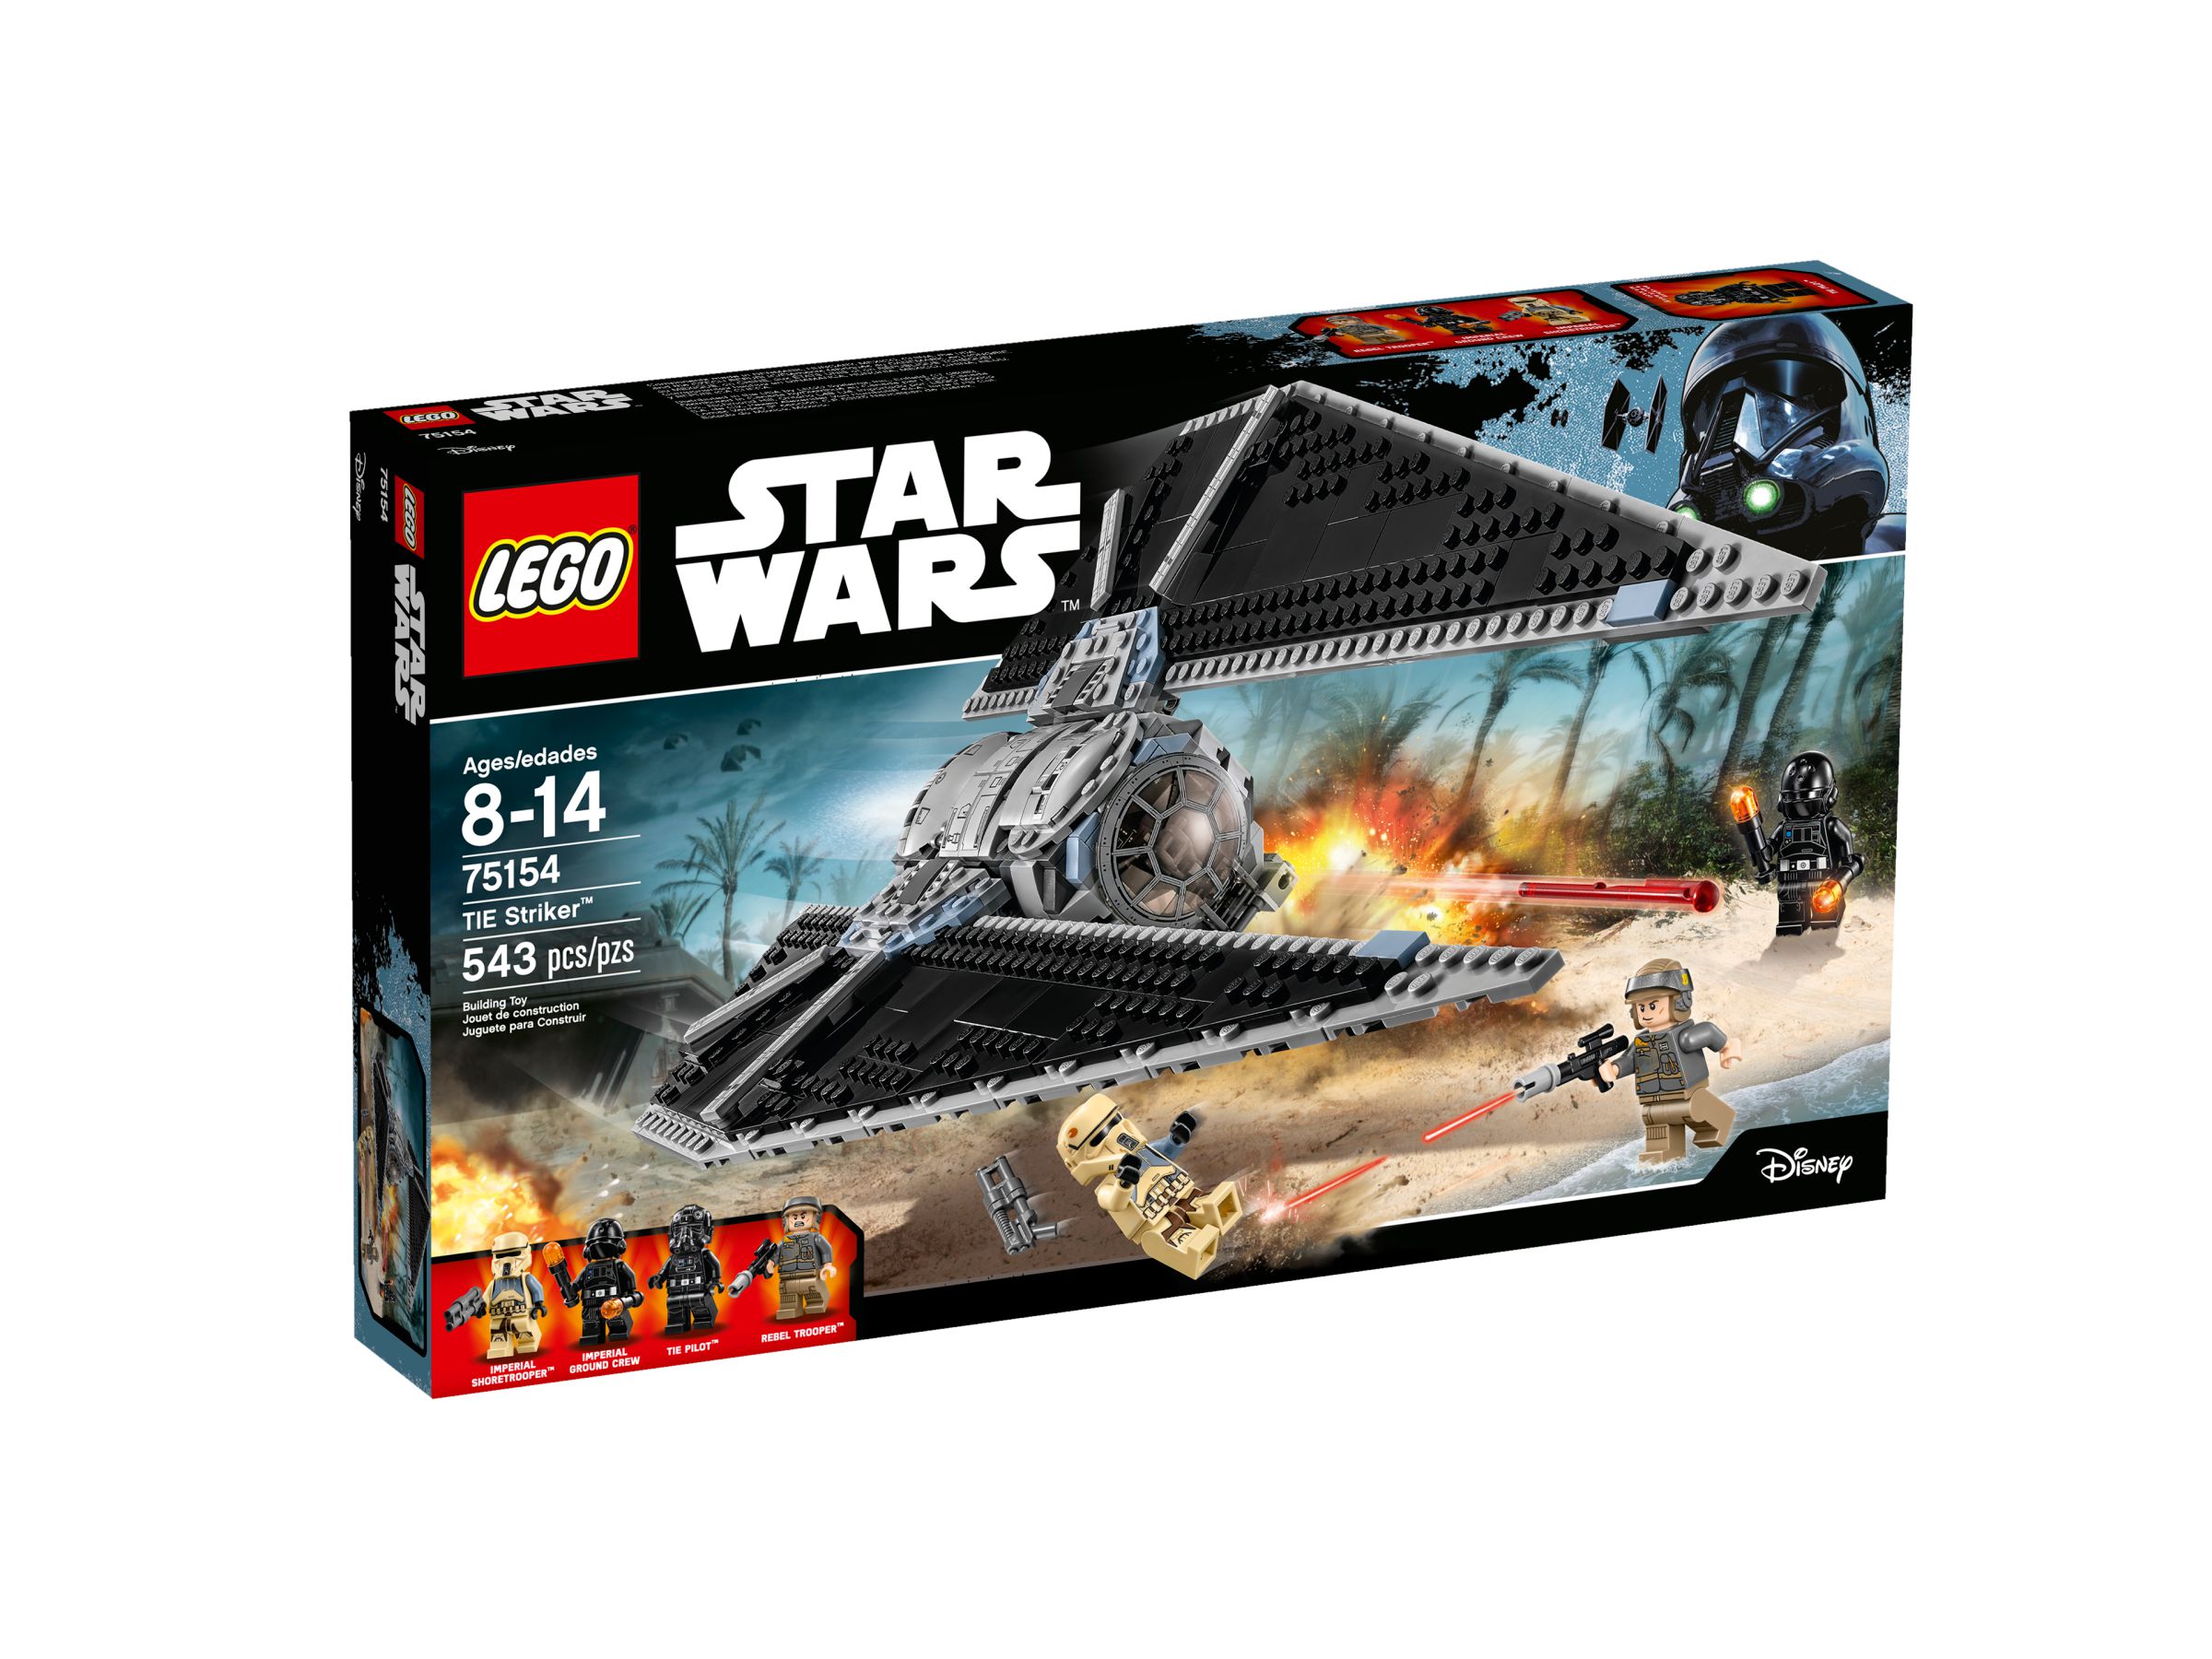 LEGO Star Wars 75154 TIE Striker™ LEGO_75154_alt1.jpg